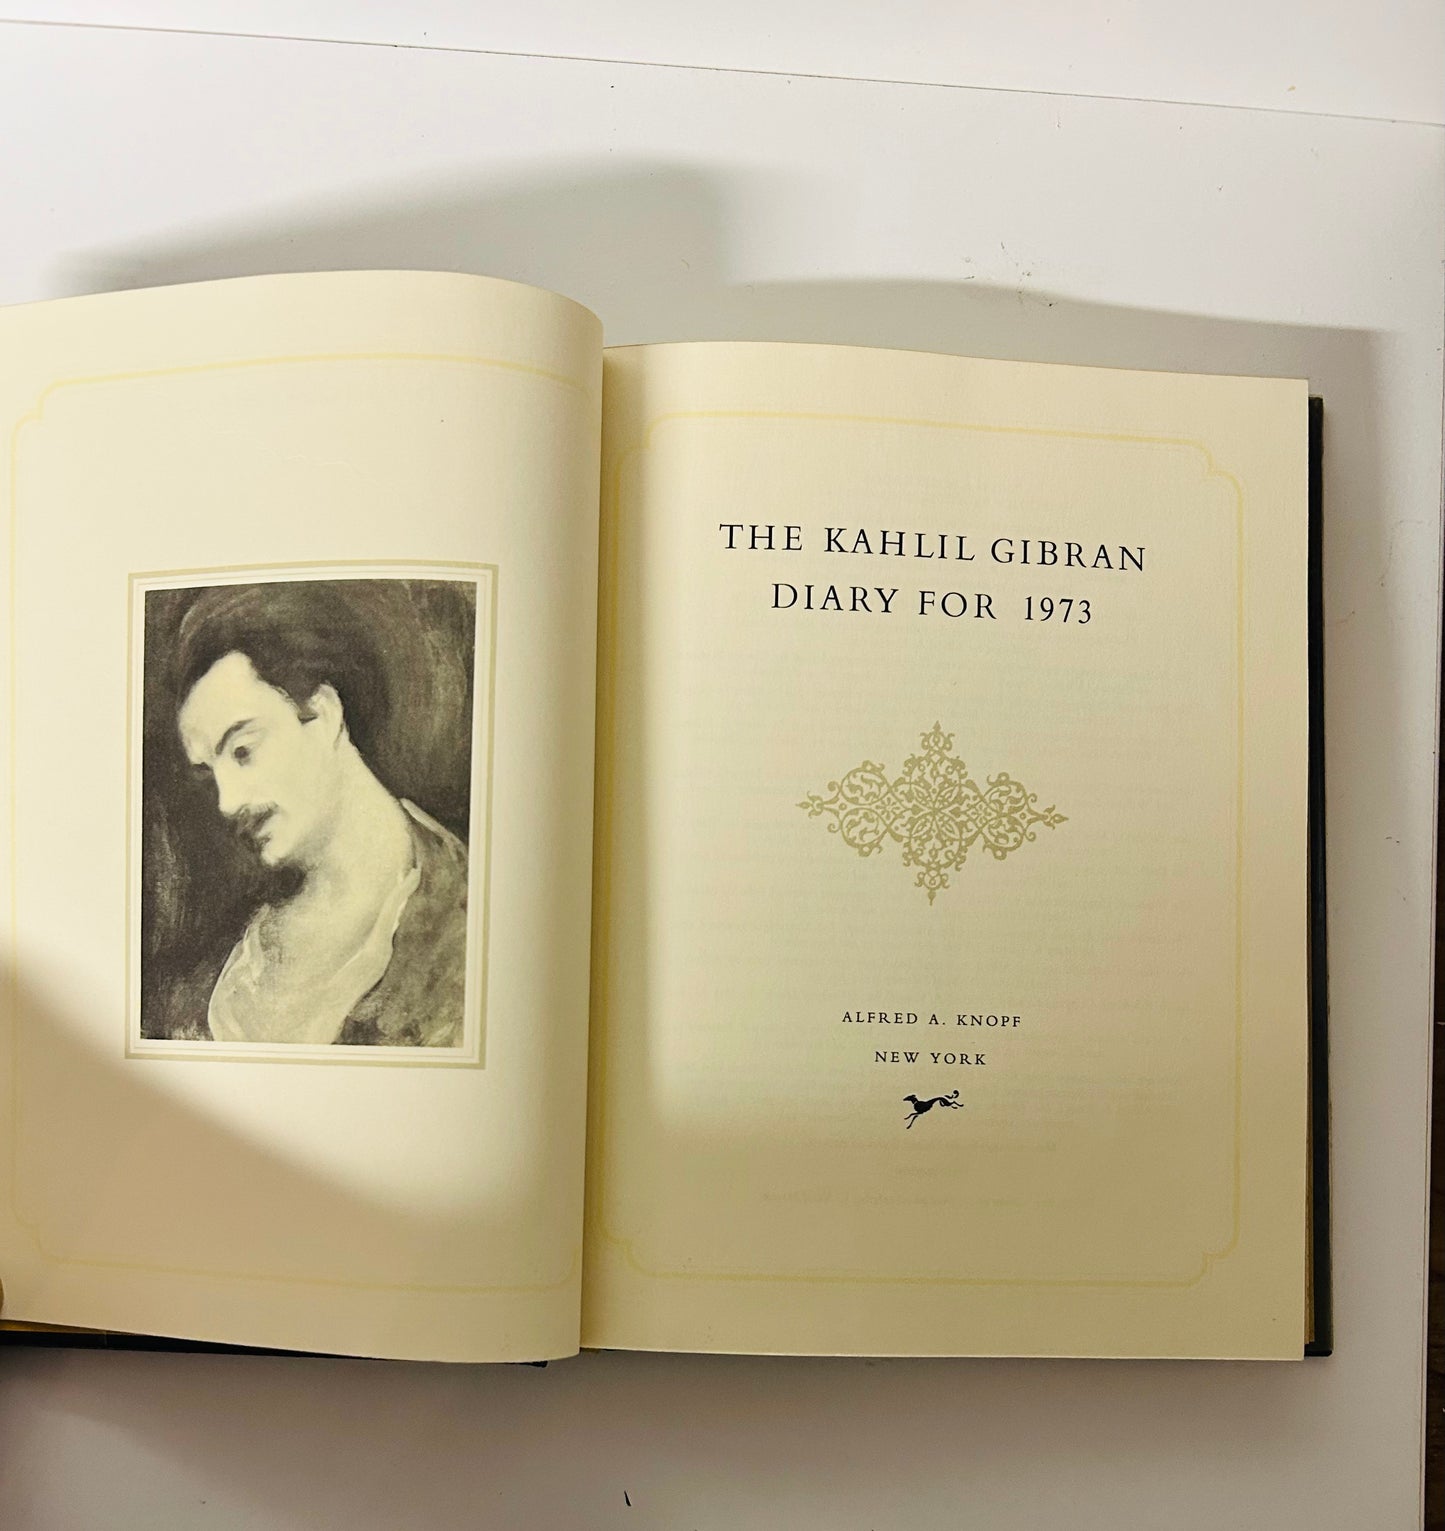 The Kahlil Gibran Diary for 1973